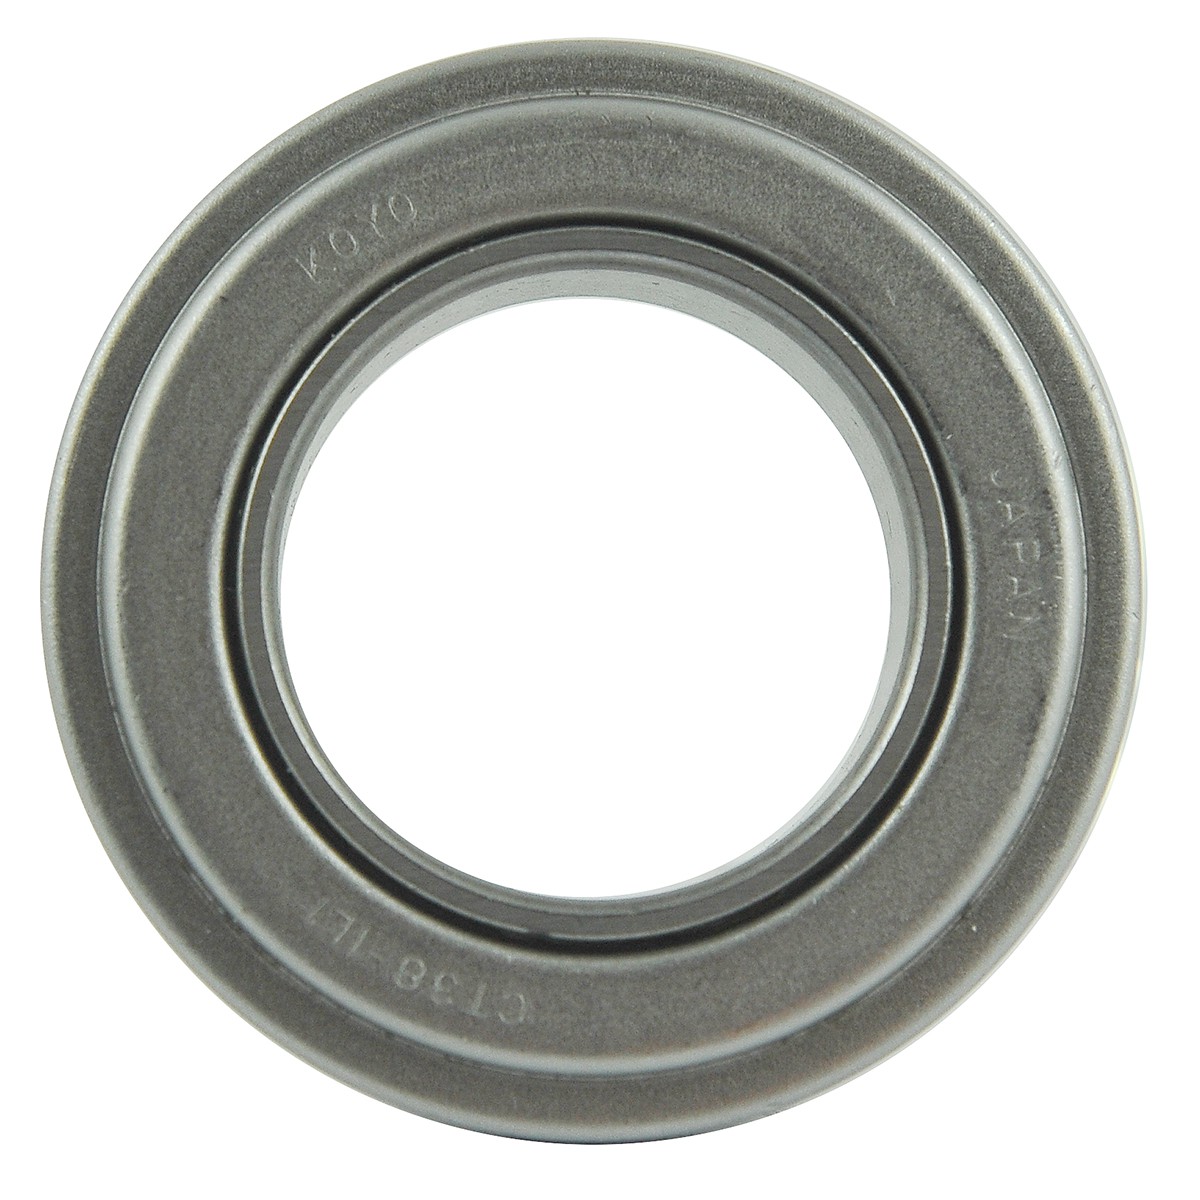 Clutch bearing / 38 x 67 x 15.25 mm / Kubota L / CT38-1L1 / 34150-14280 / 32150-14820 / 32270-14820 / 5-23-108-12